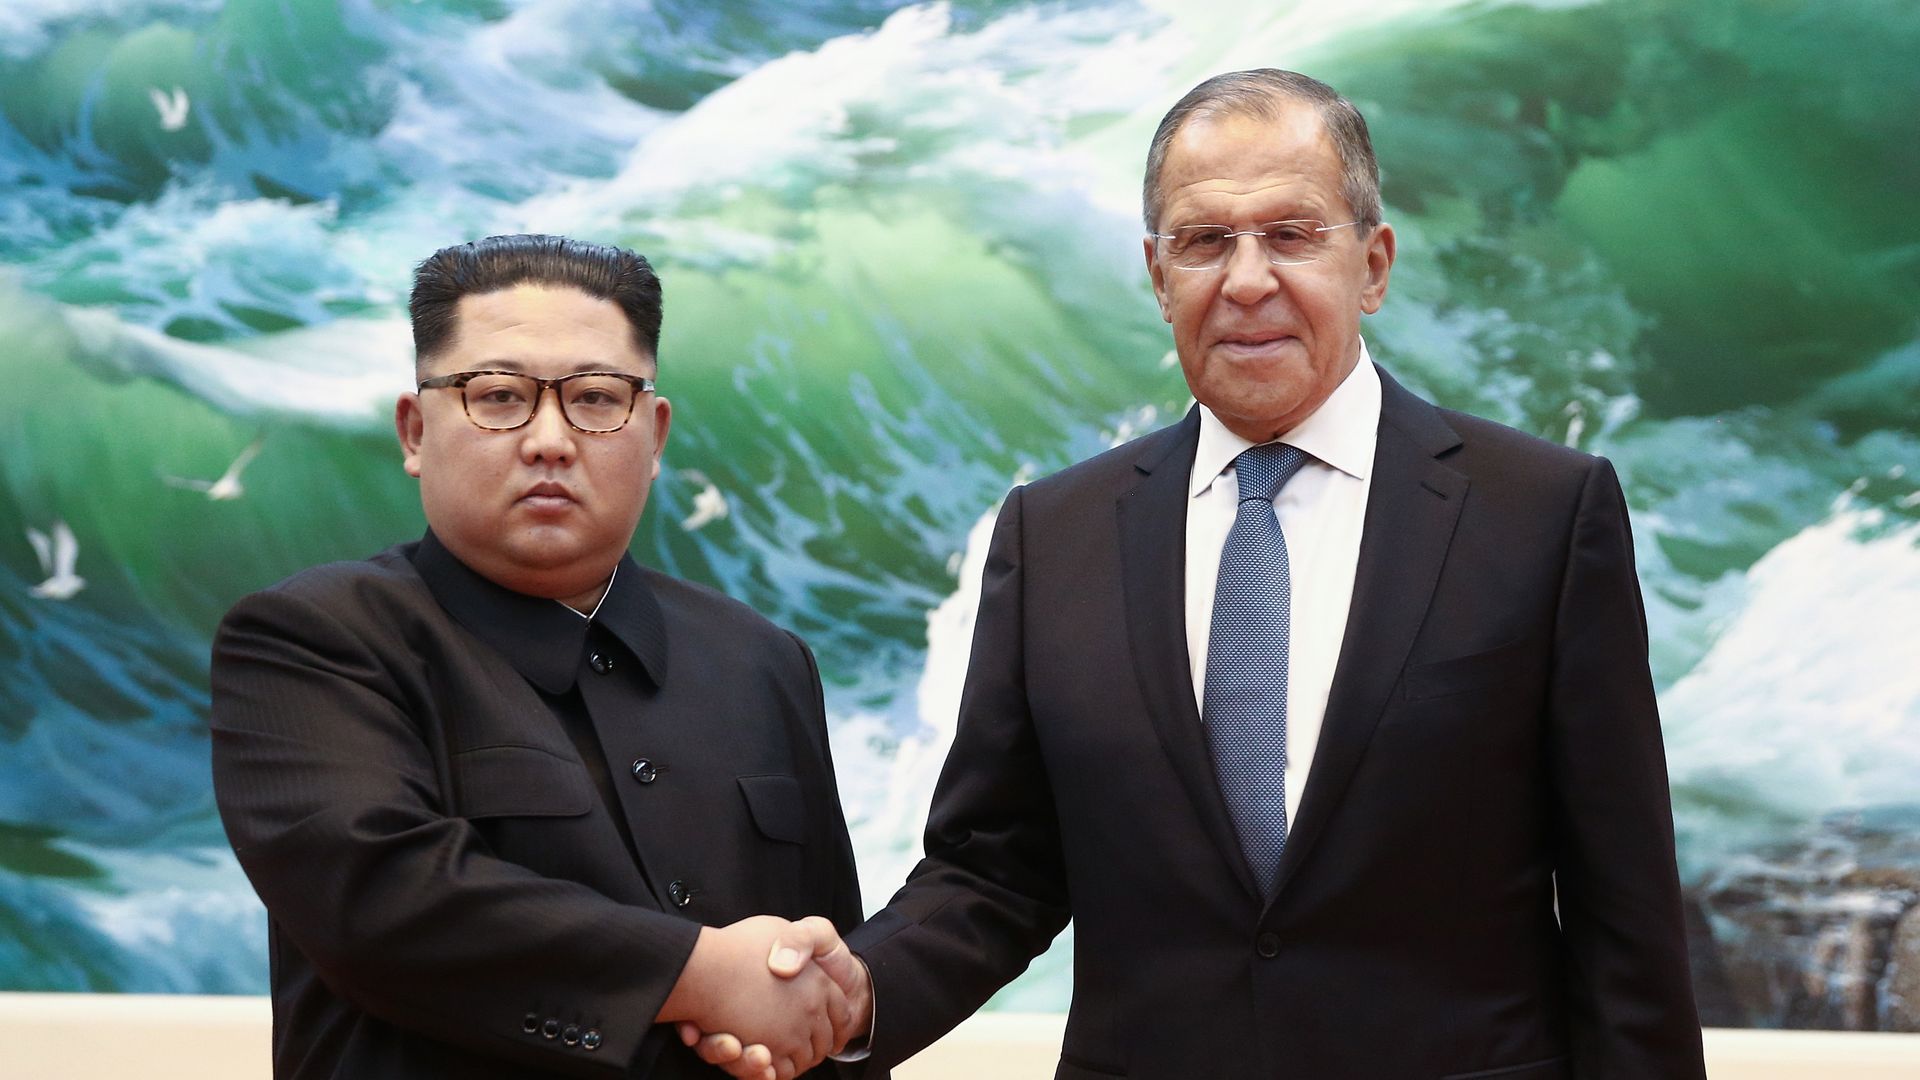 Kim Jong Un and Sergei Lavrov shaking hands